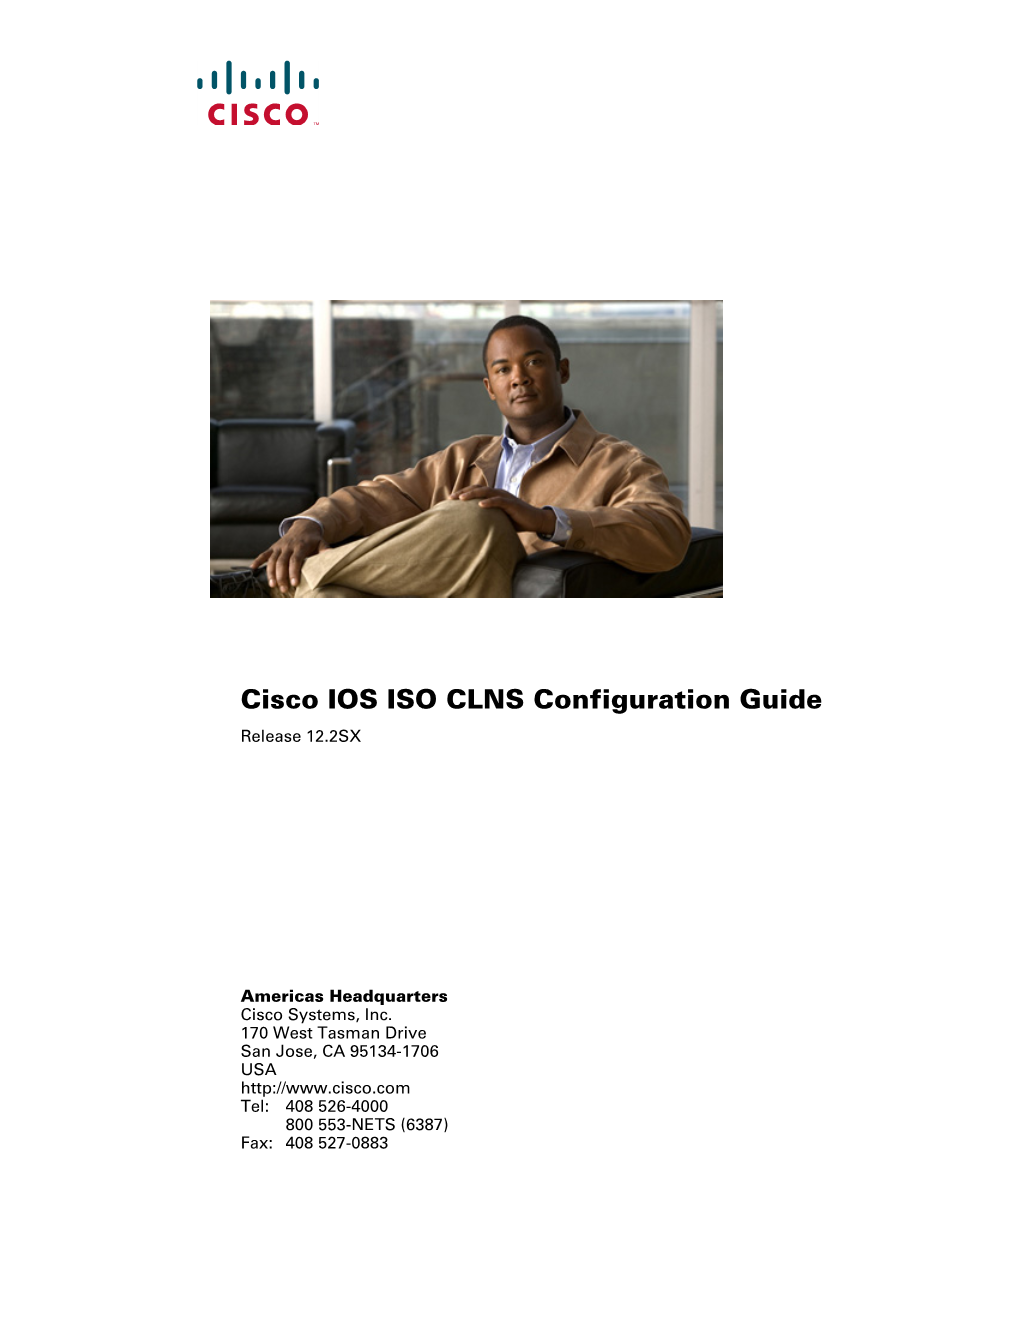 Cisco IOS ISO CLNS Configuration Guide, Release 12.2SX